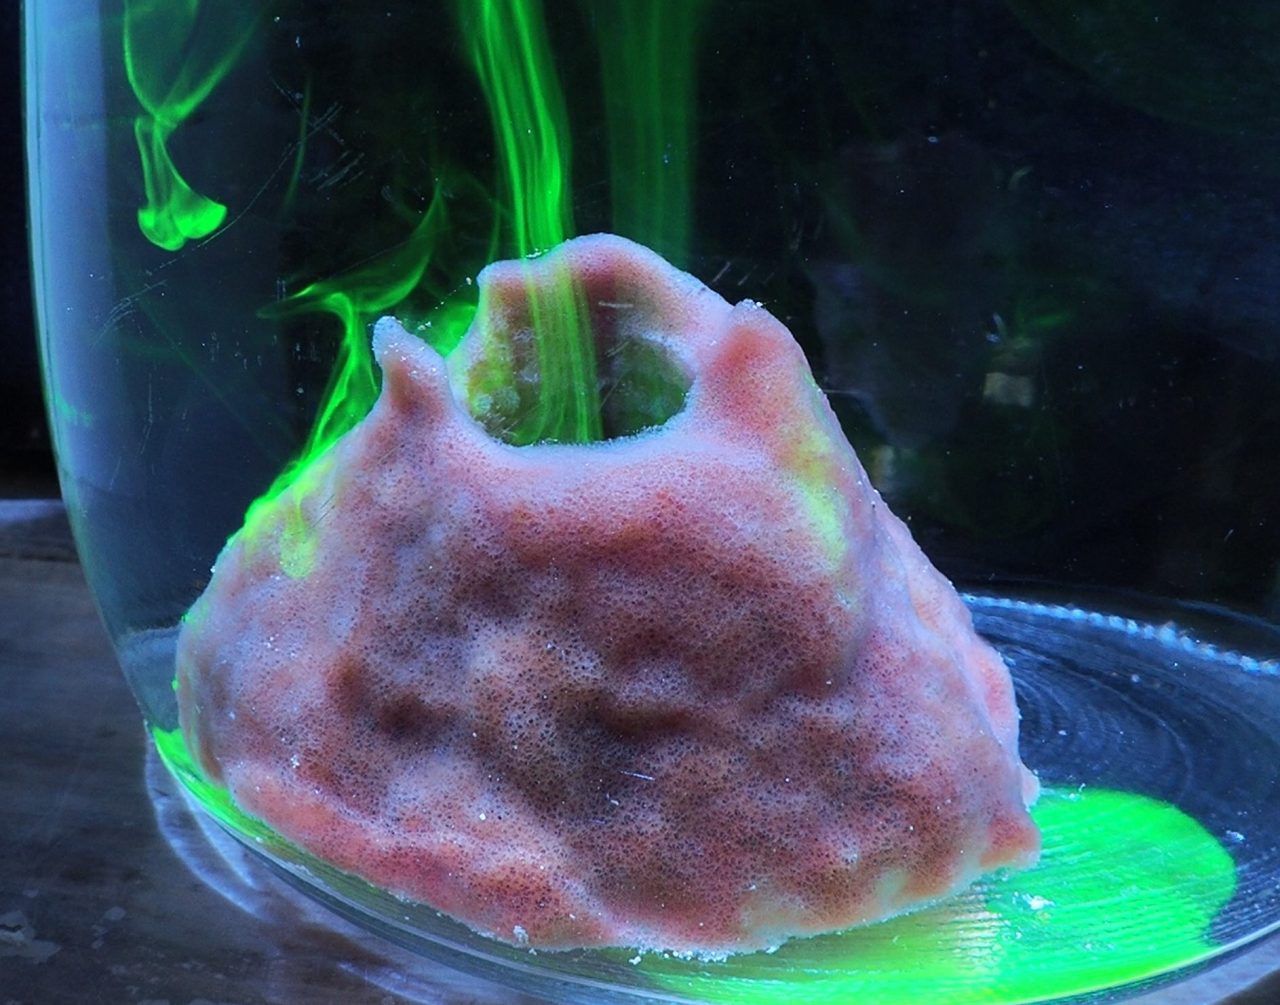 A baby giant barrel sponge (Xestospongia muta) pumps fluorescein dye in a glass jar. Photo: Joseph Pawlik